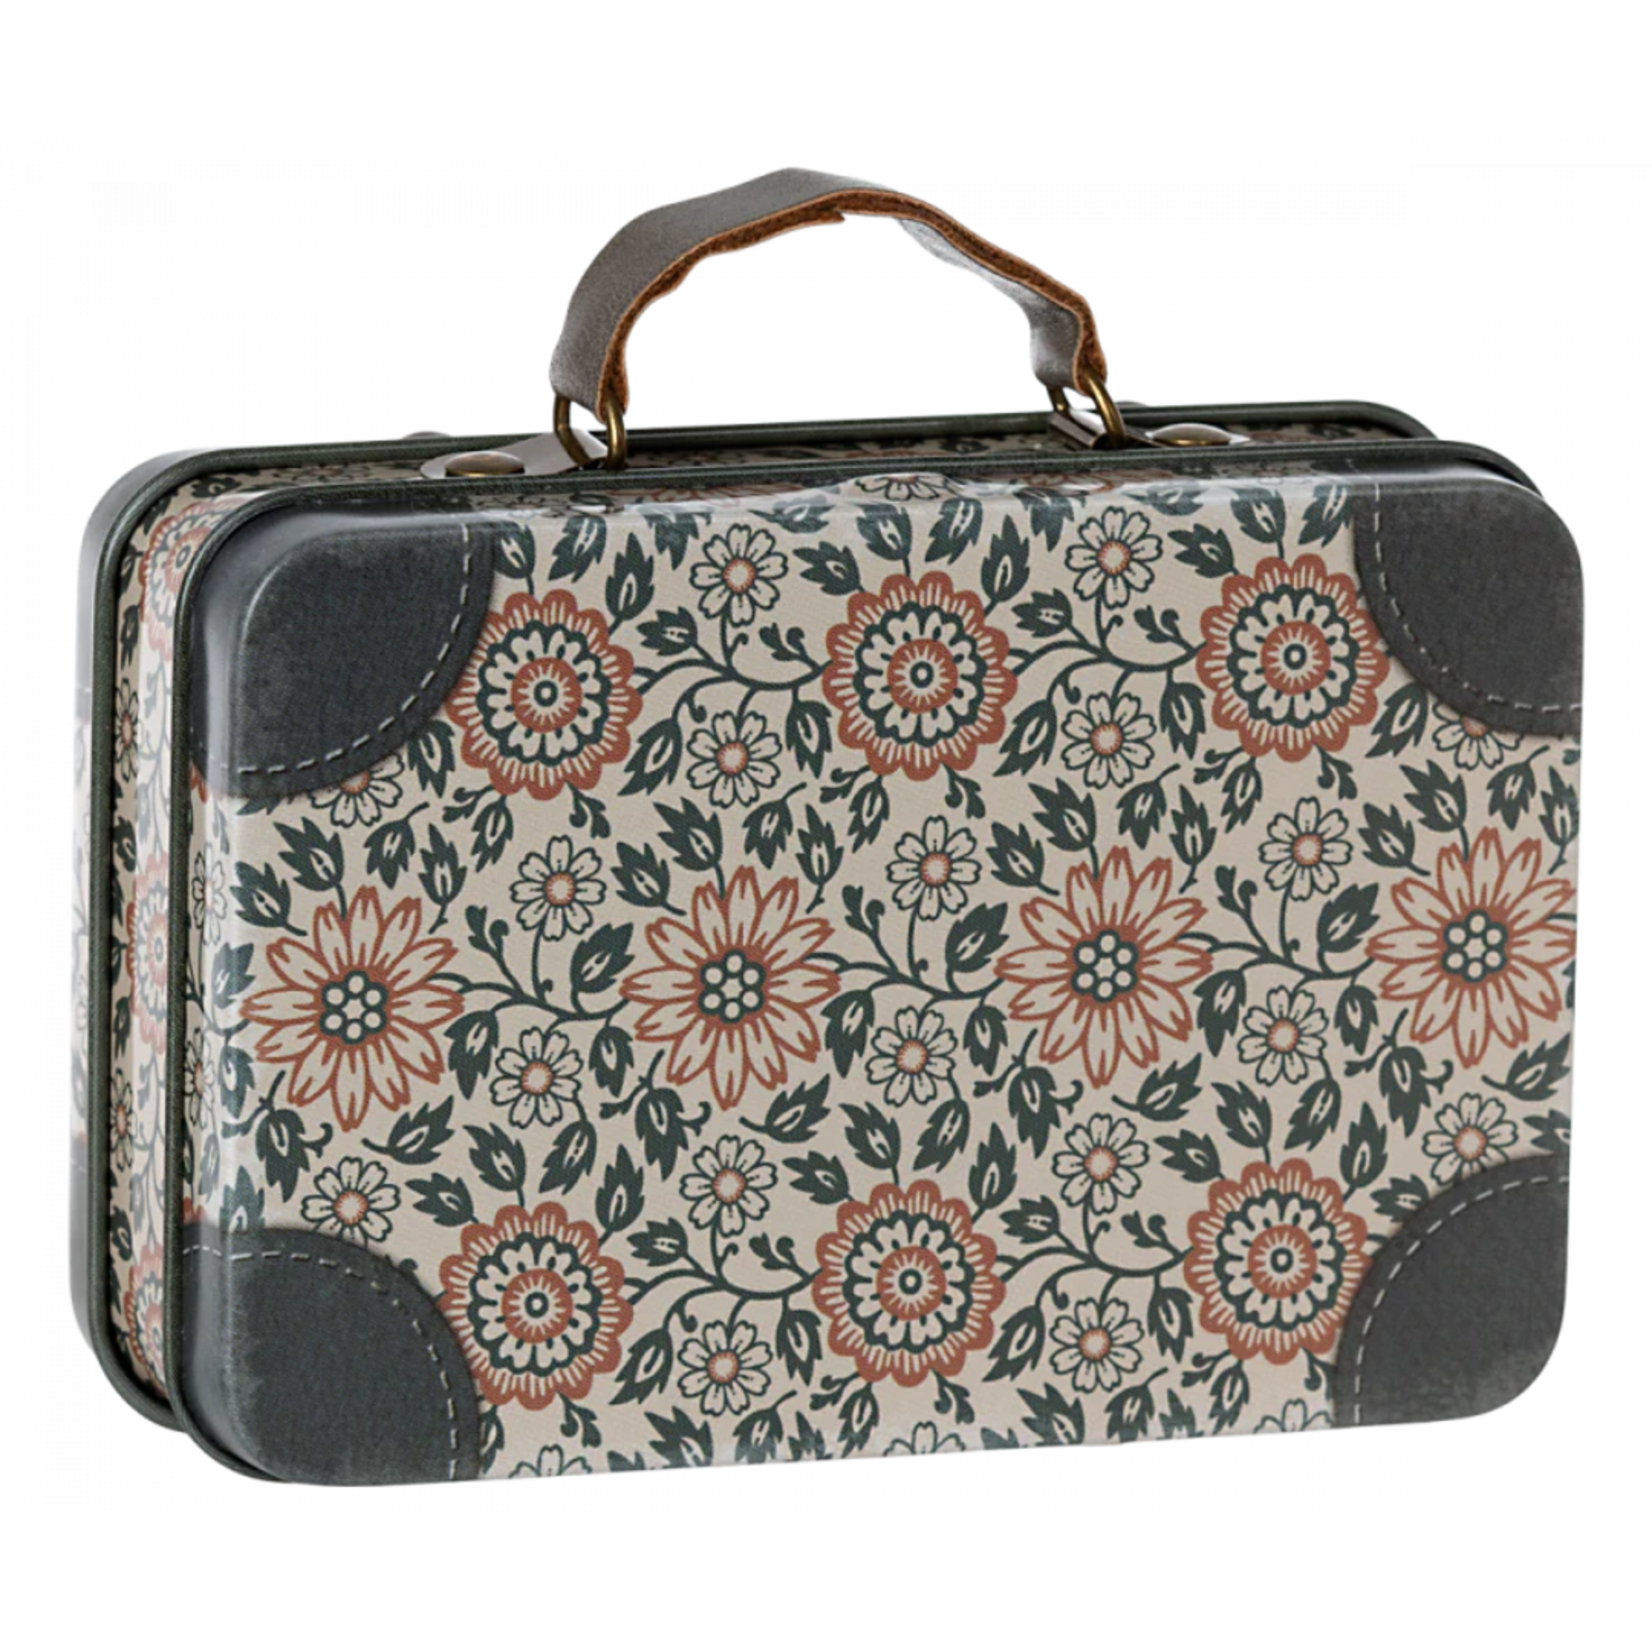 Maileg USA Small Suitcase, Asta